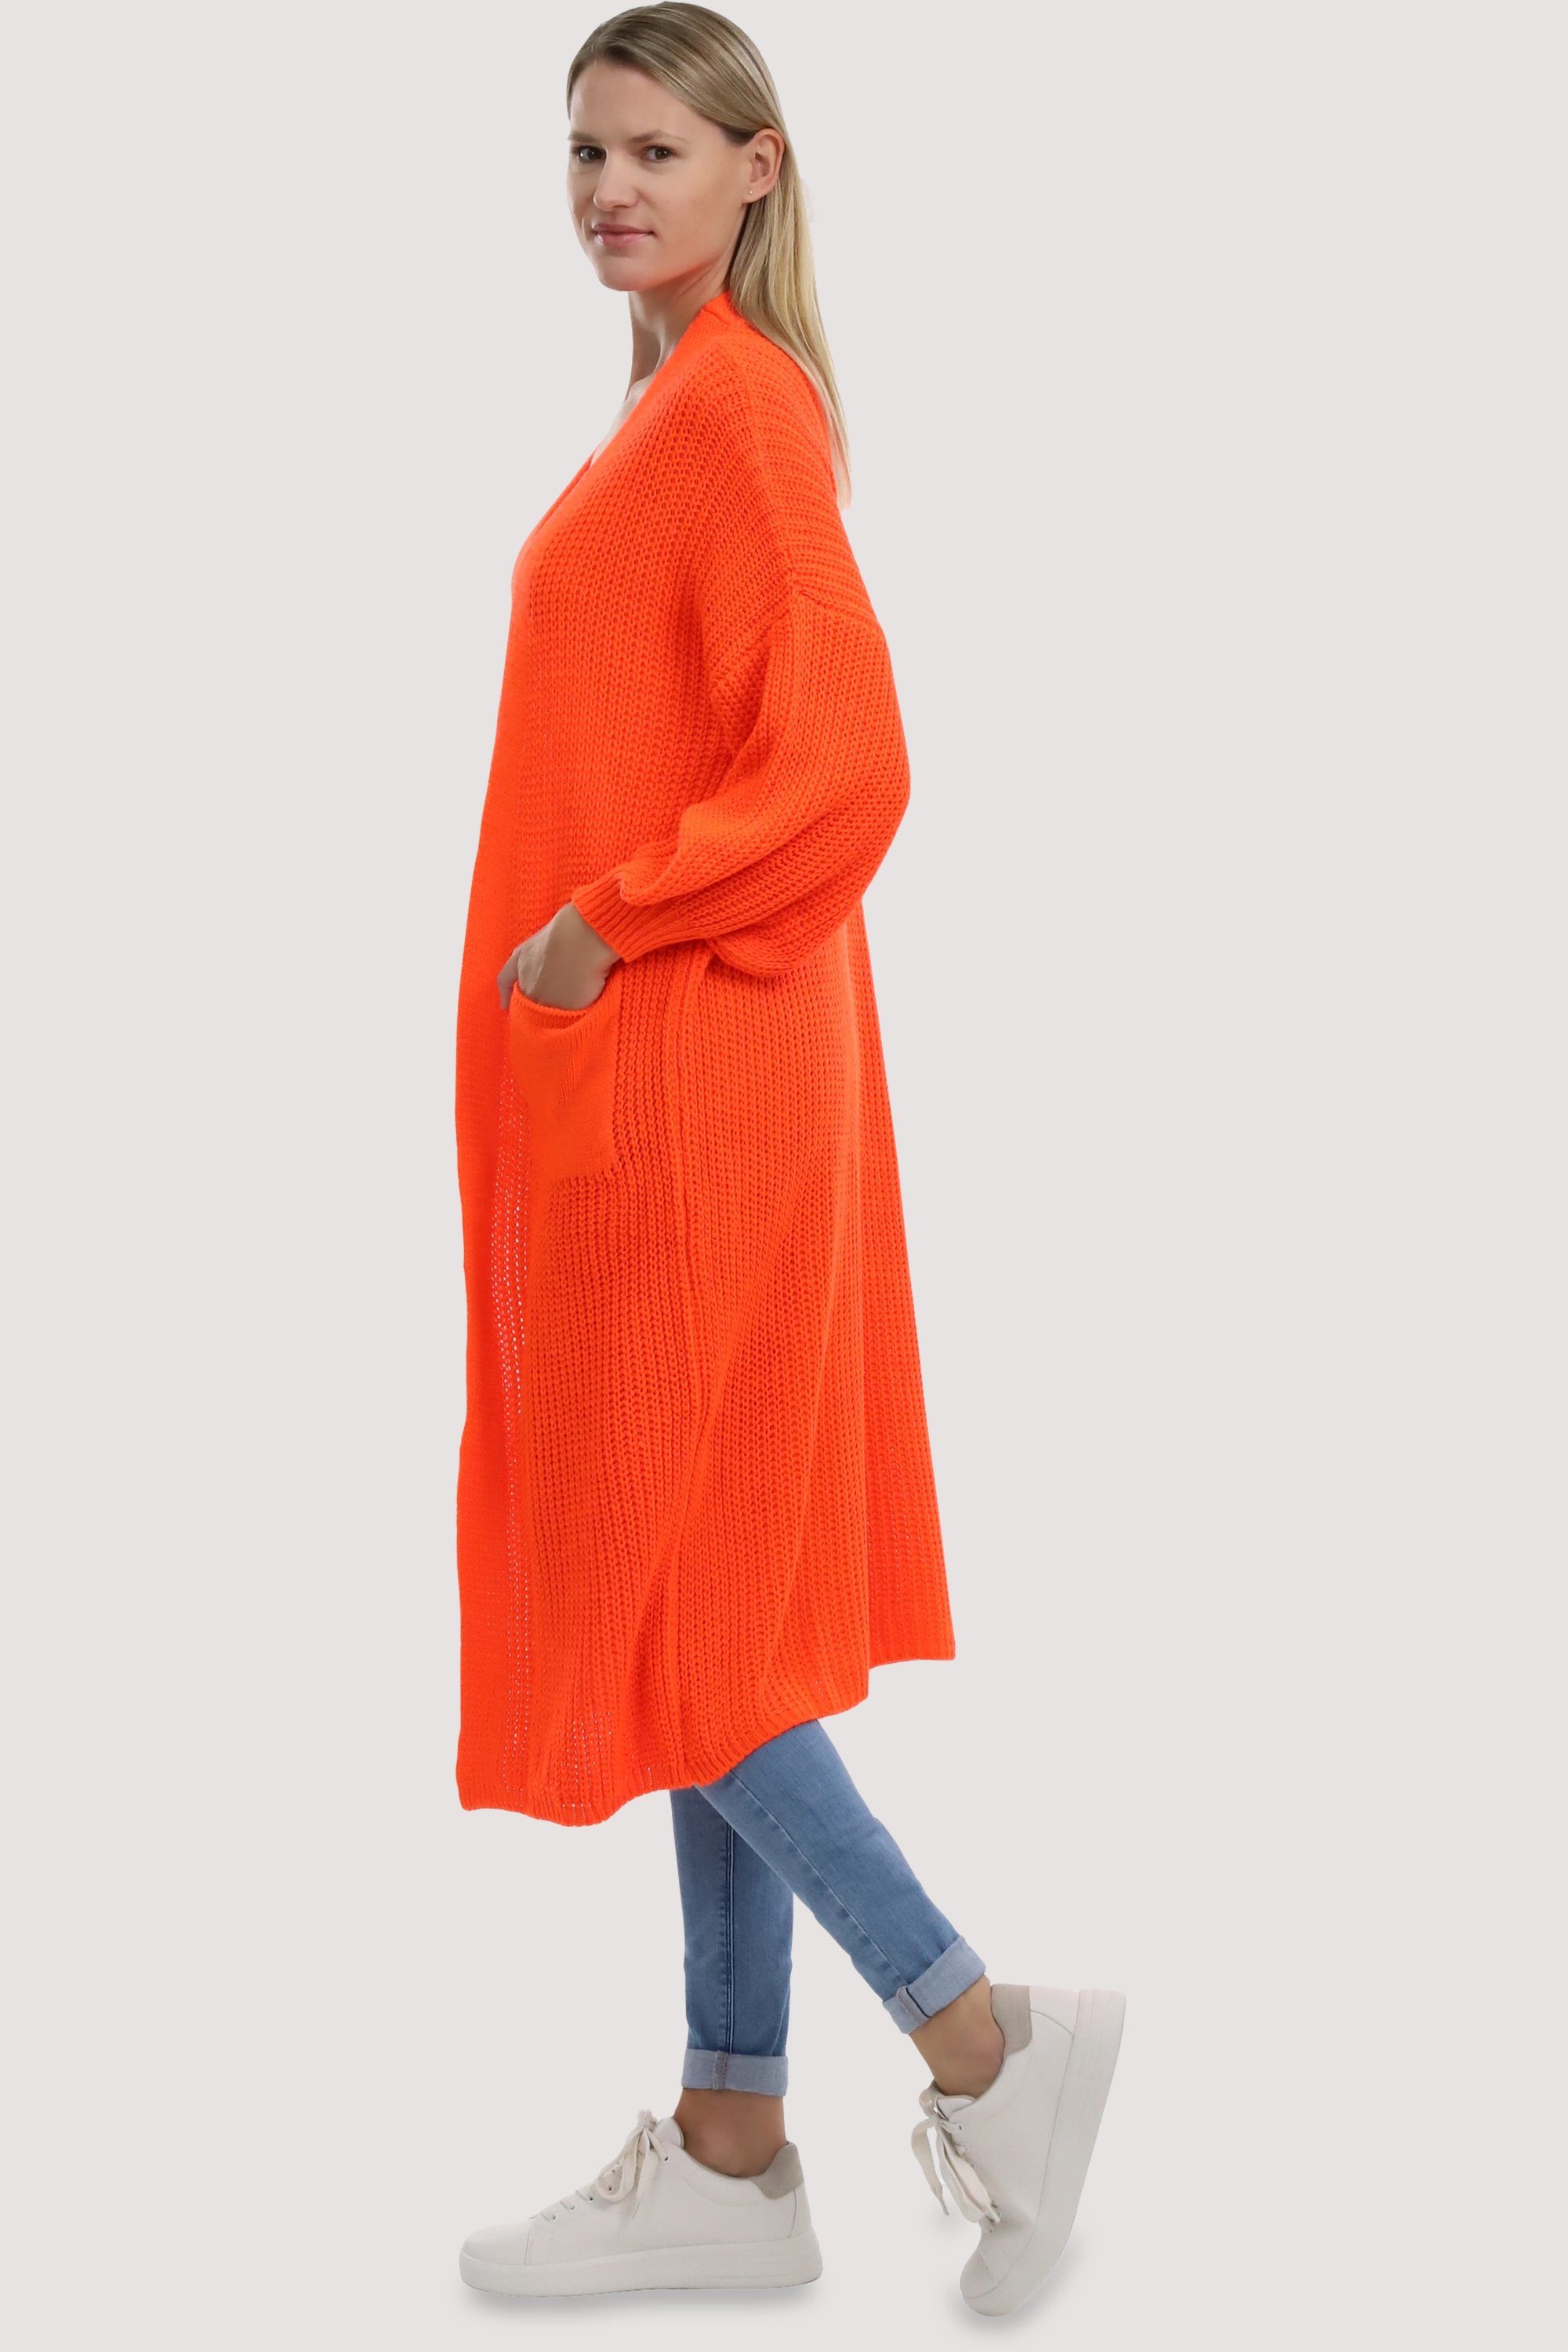 malito more than fashion 3151 in orange lässiger Longstrickjacke Grobstrick-Optik